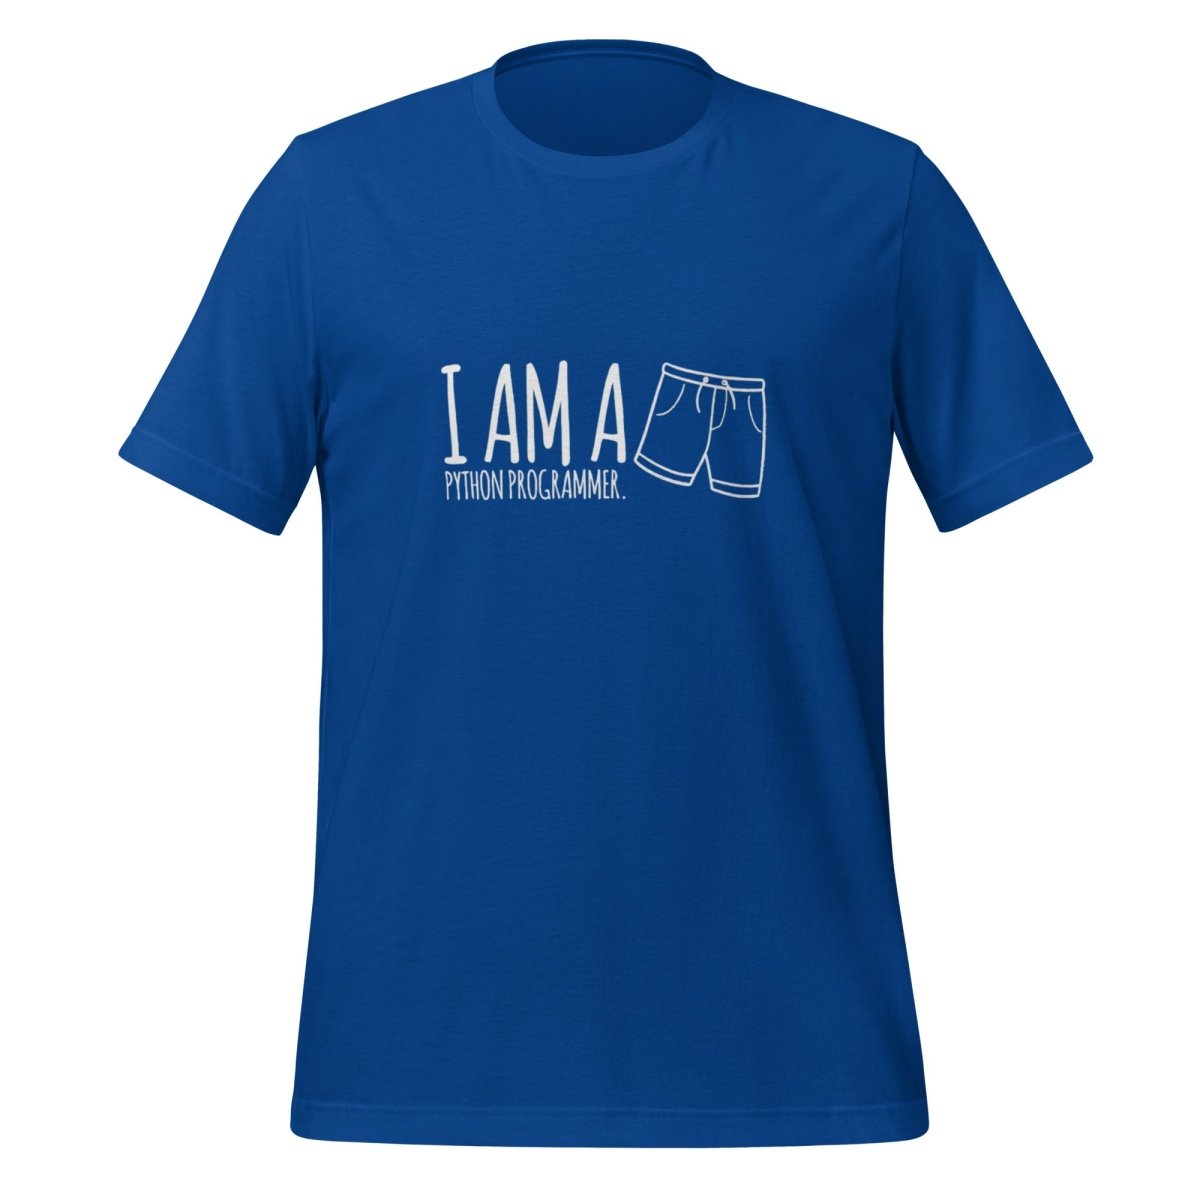 I'm a Python programmer. T - Shirt (unisex) - True Royal - AI Store